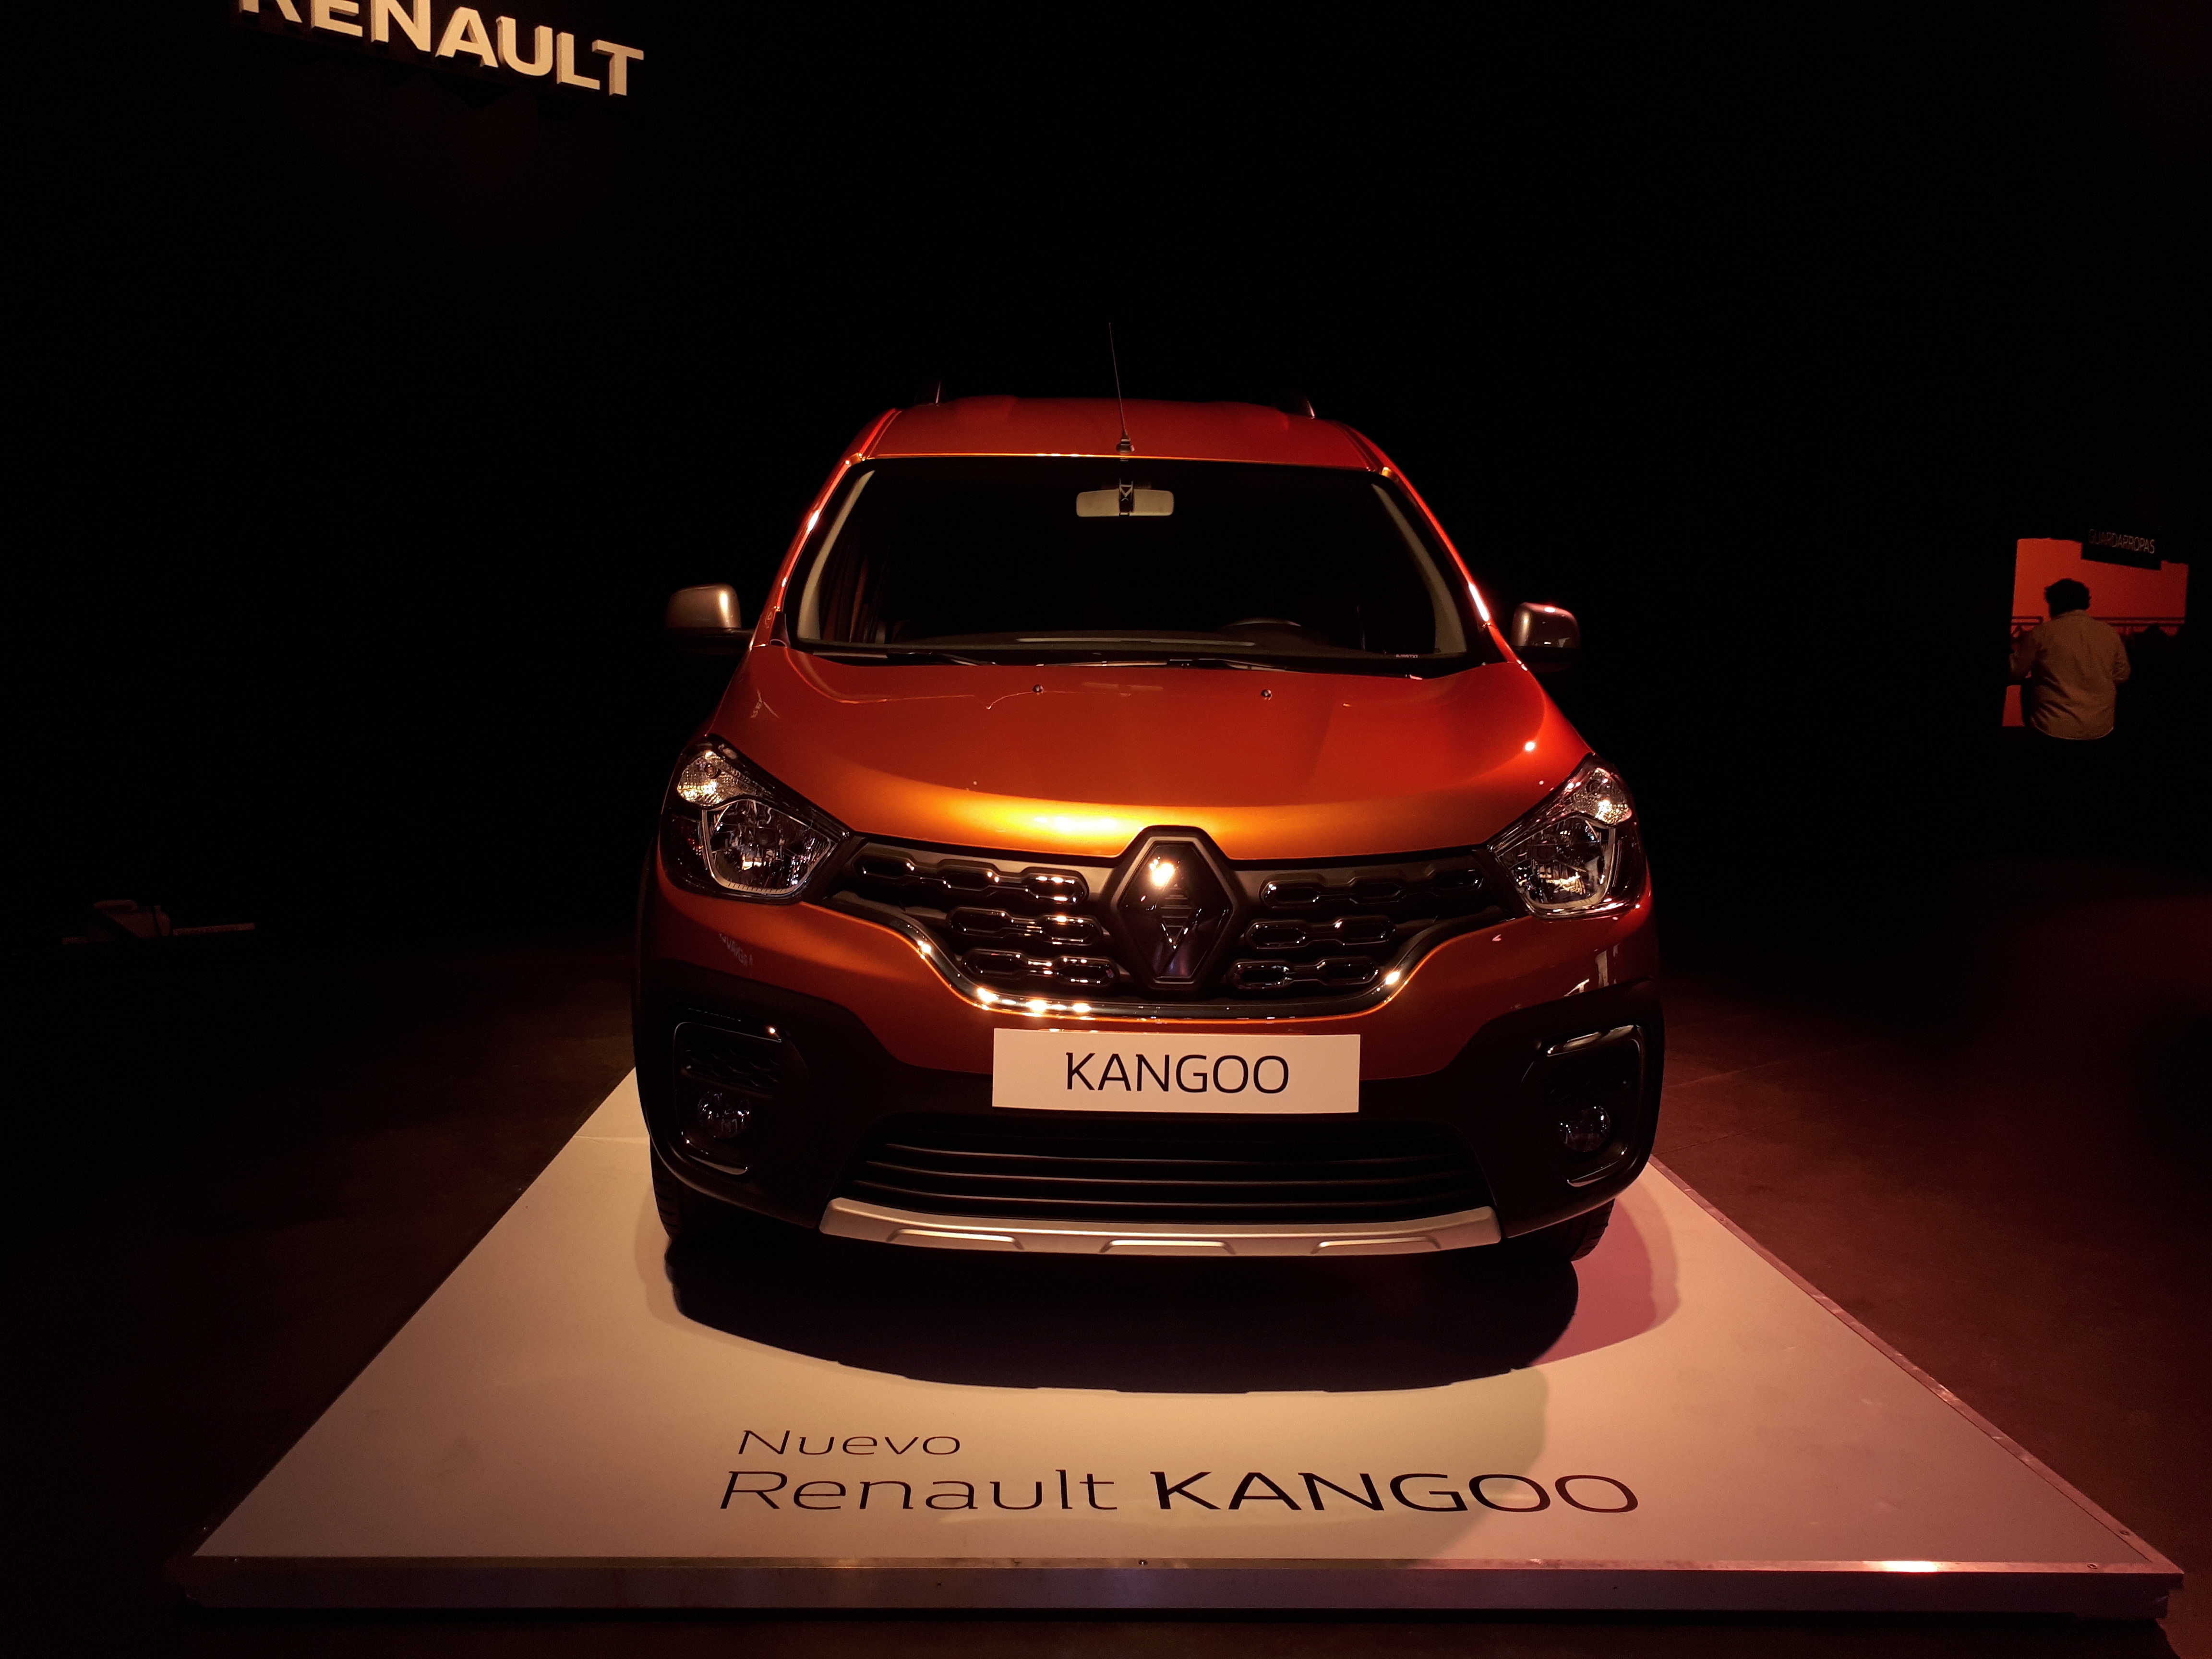 Renault Kangoo - Wikipedia